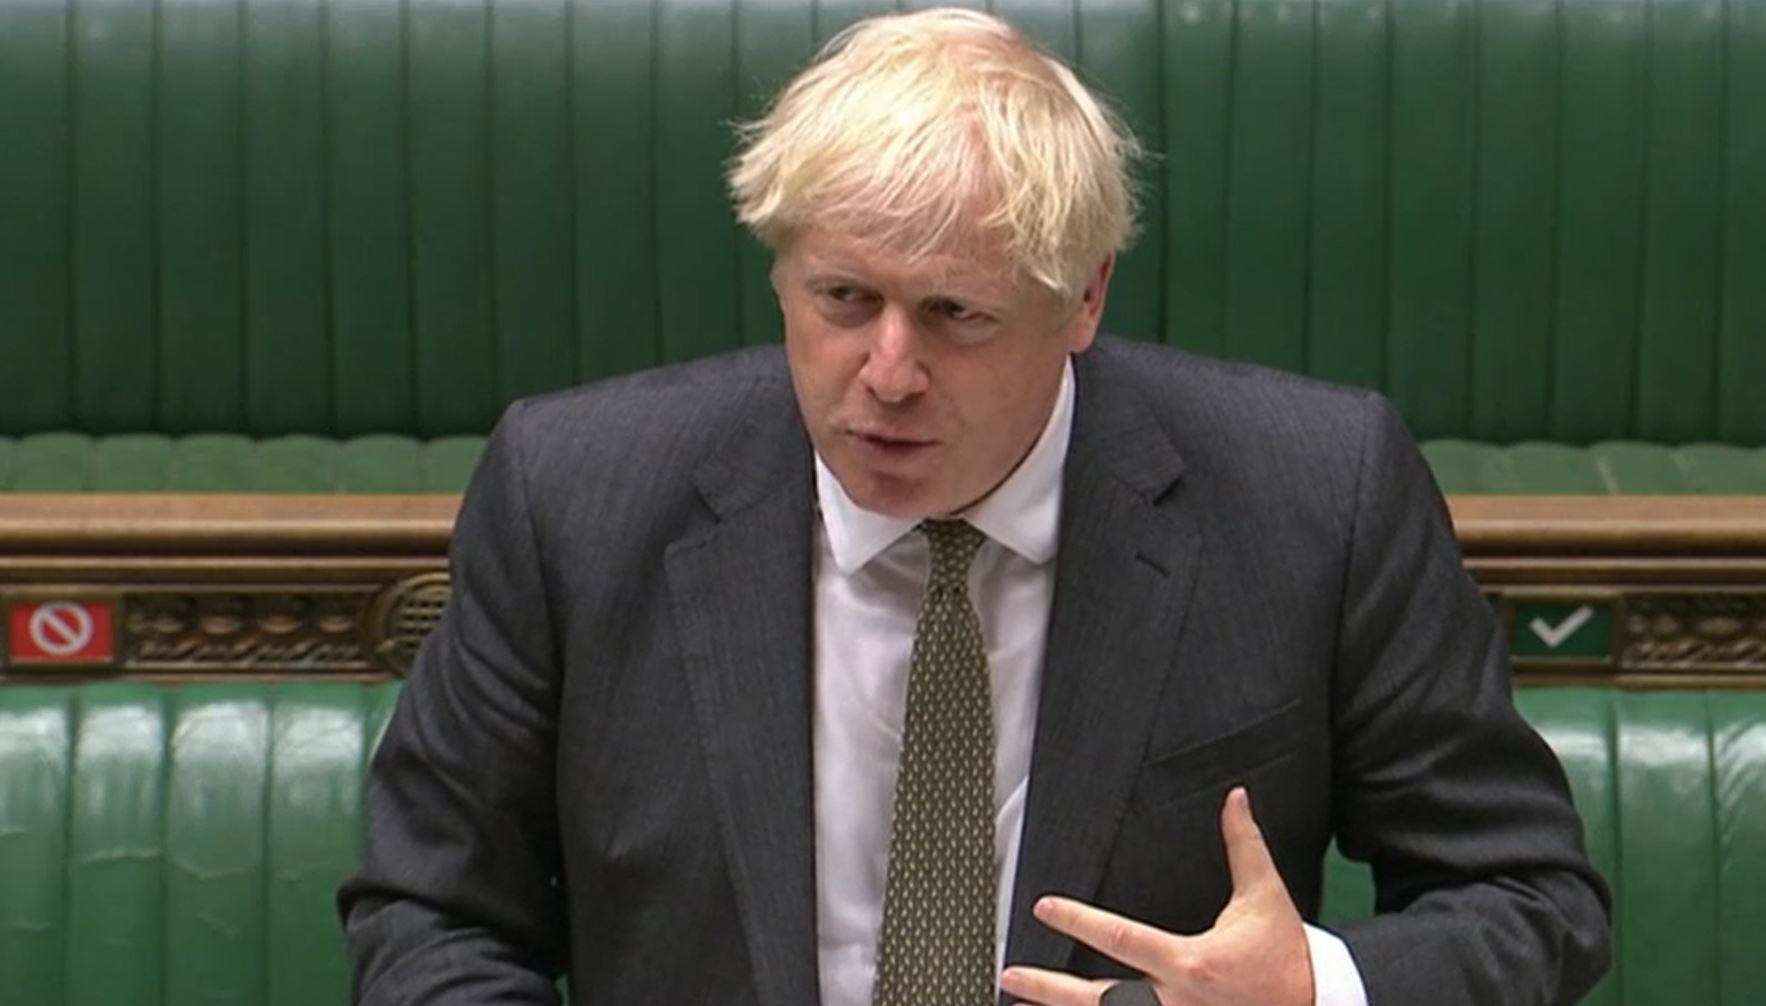 Boris Johnson speaking in the House of Commons